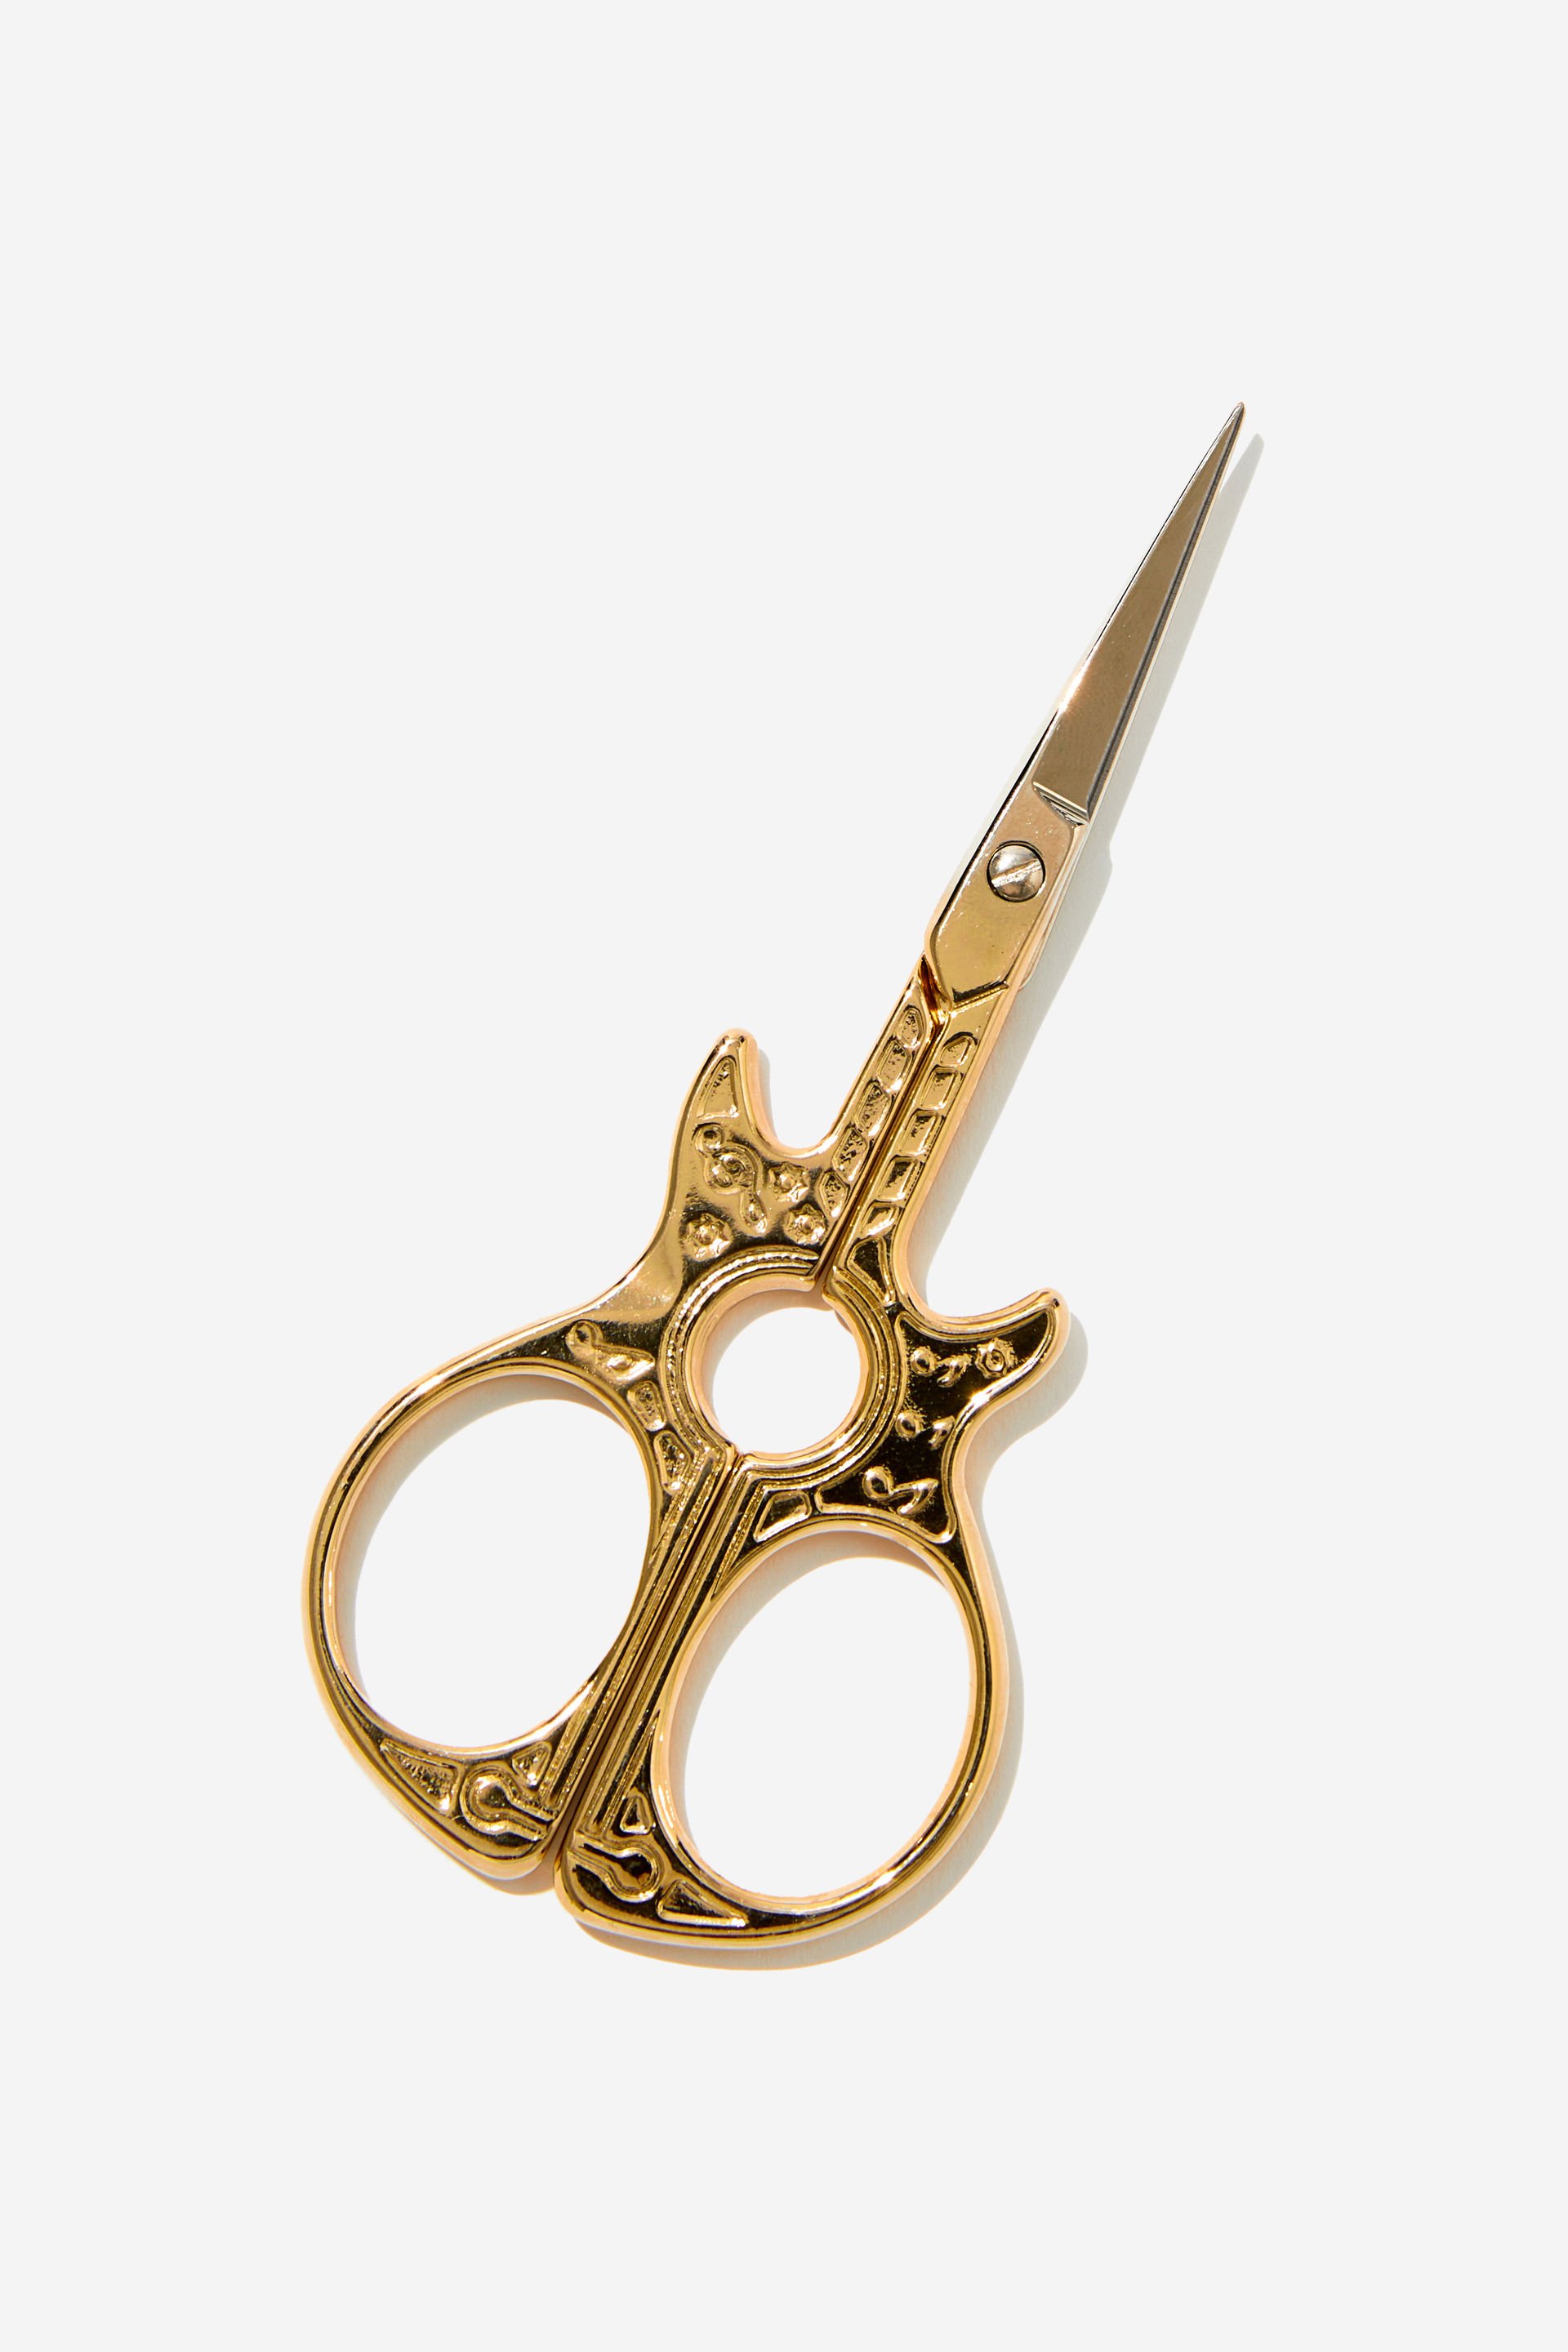 Typo - Shaped Metal Scissors - Guitar gold